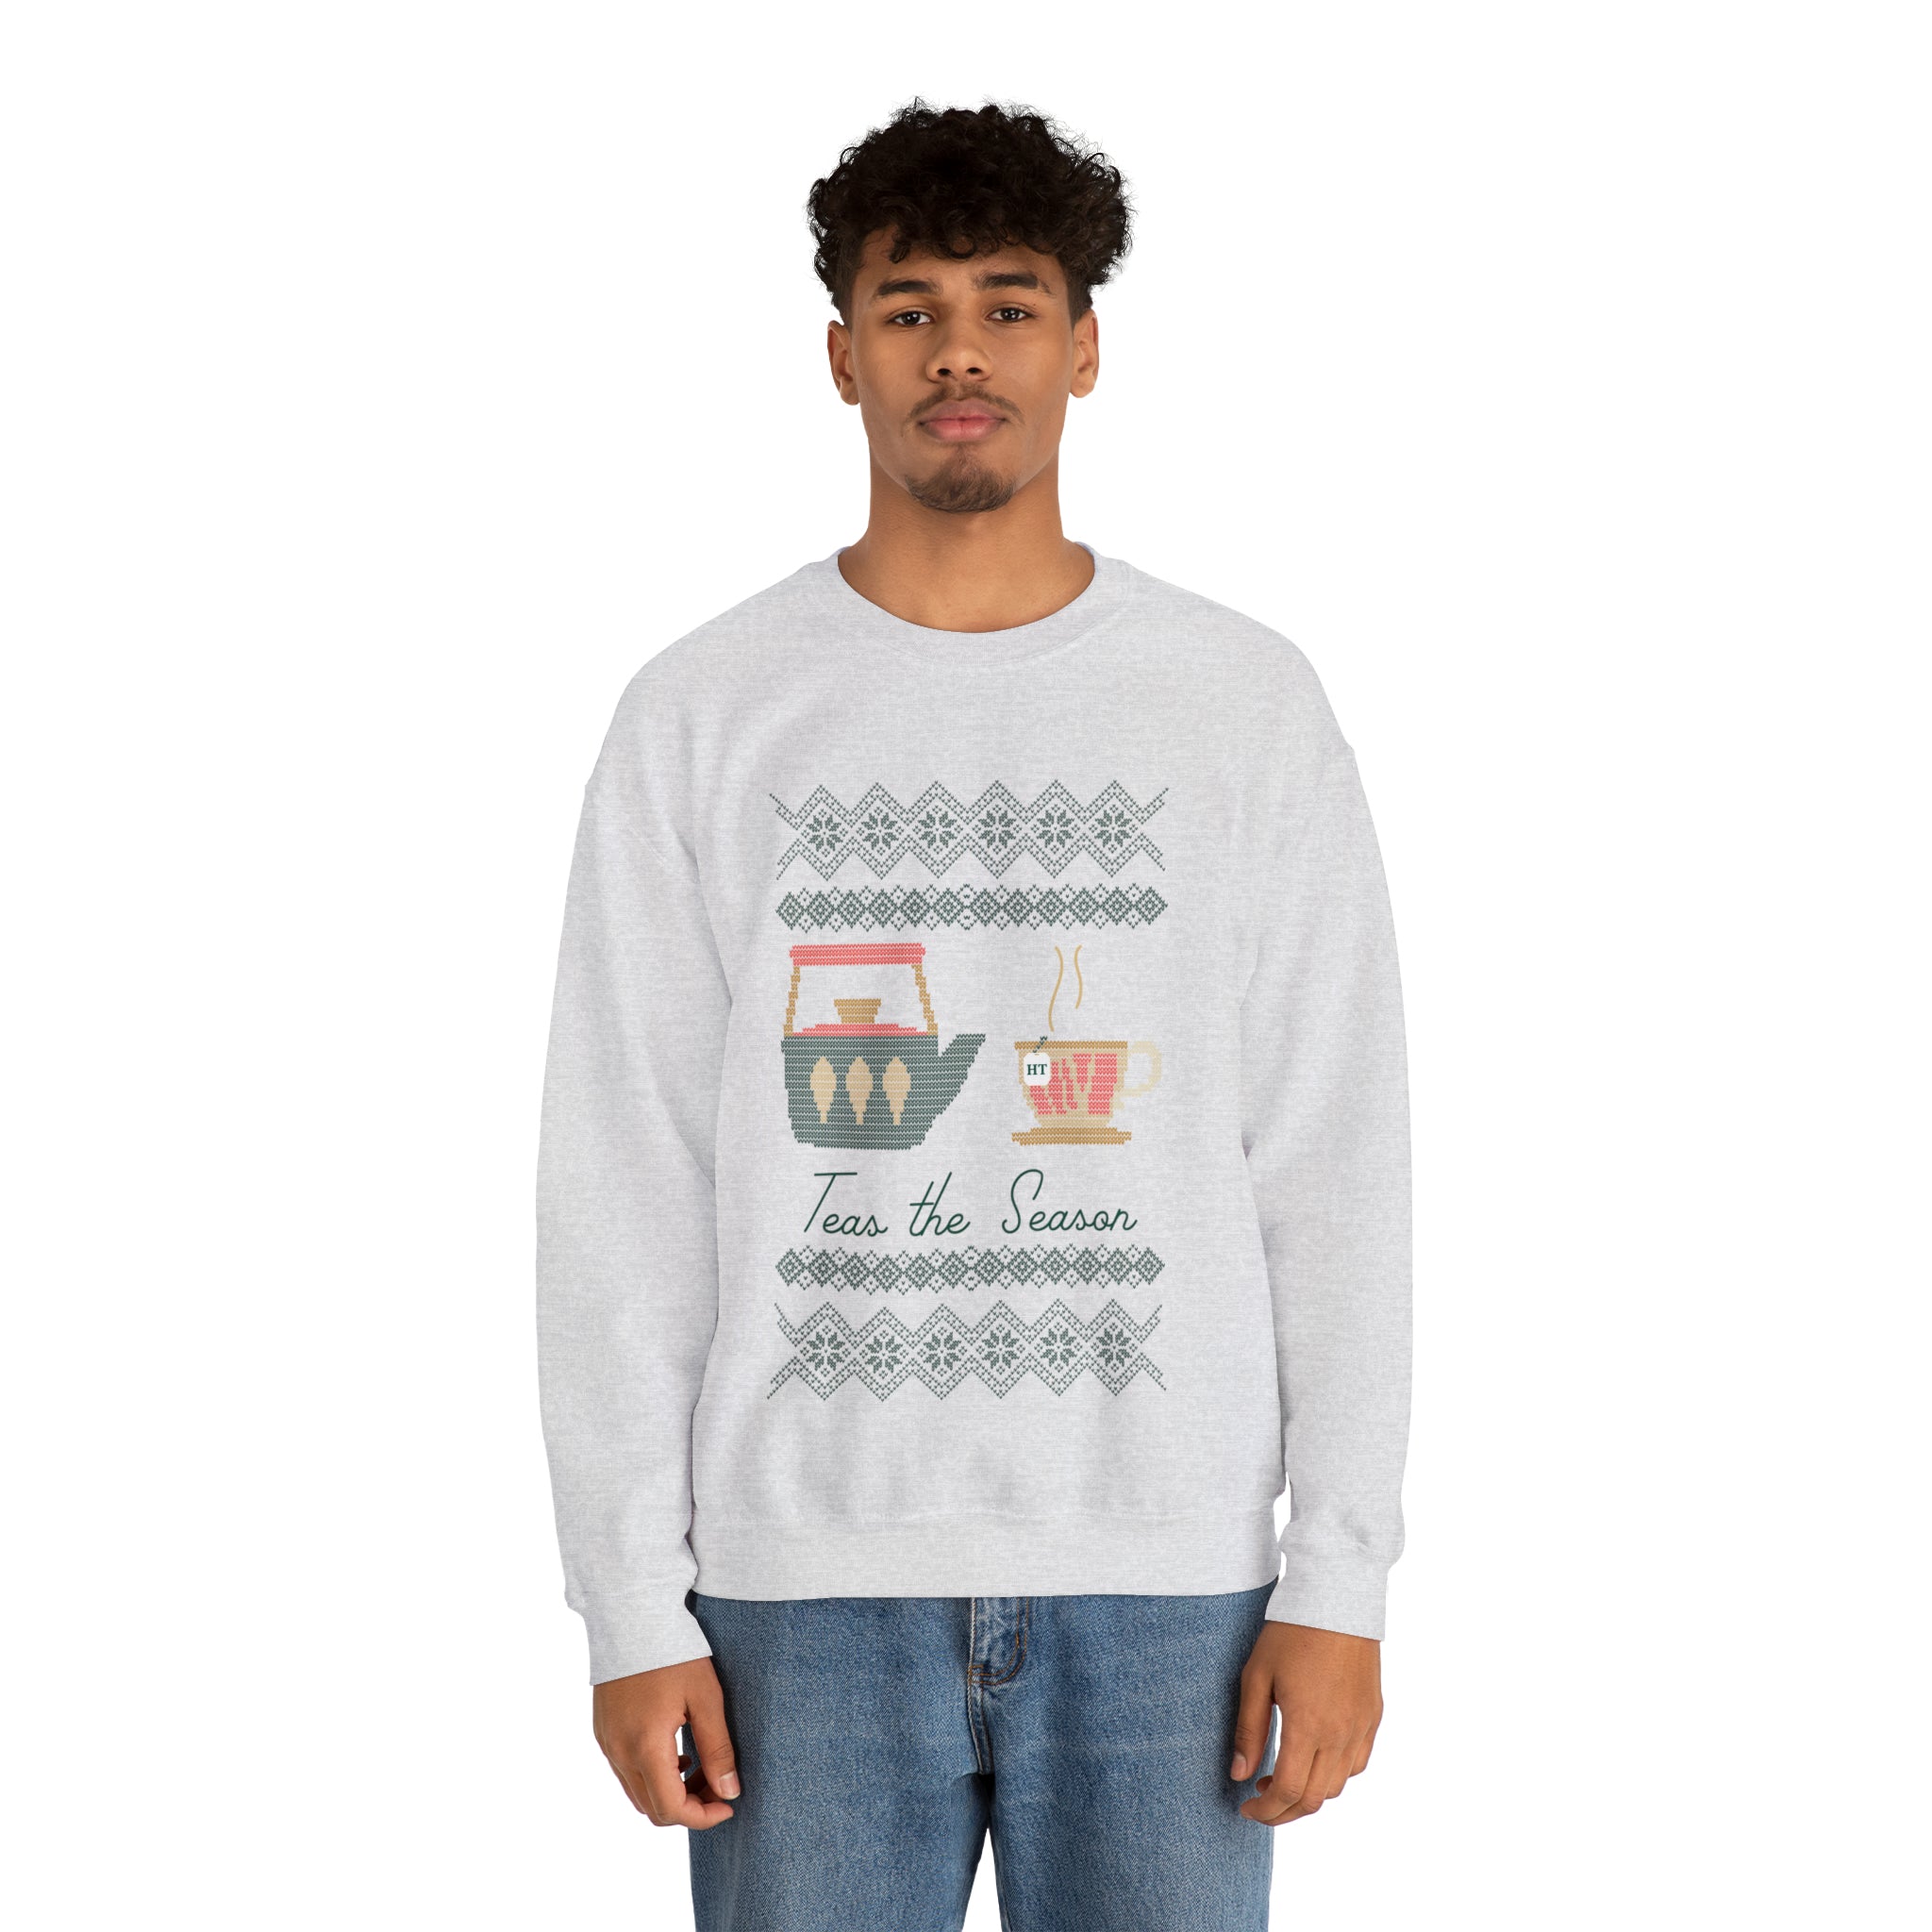 Teas The Season Holiday Sweater - Harney & Sons Fine Teas